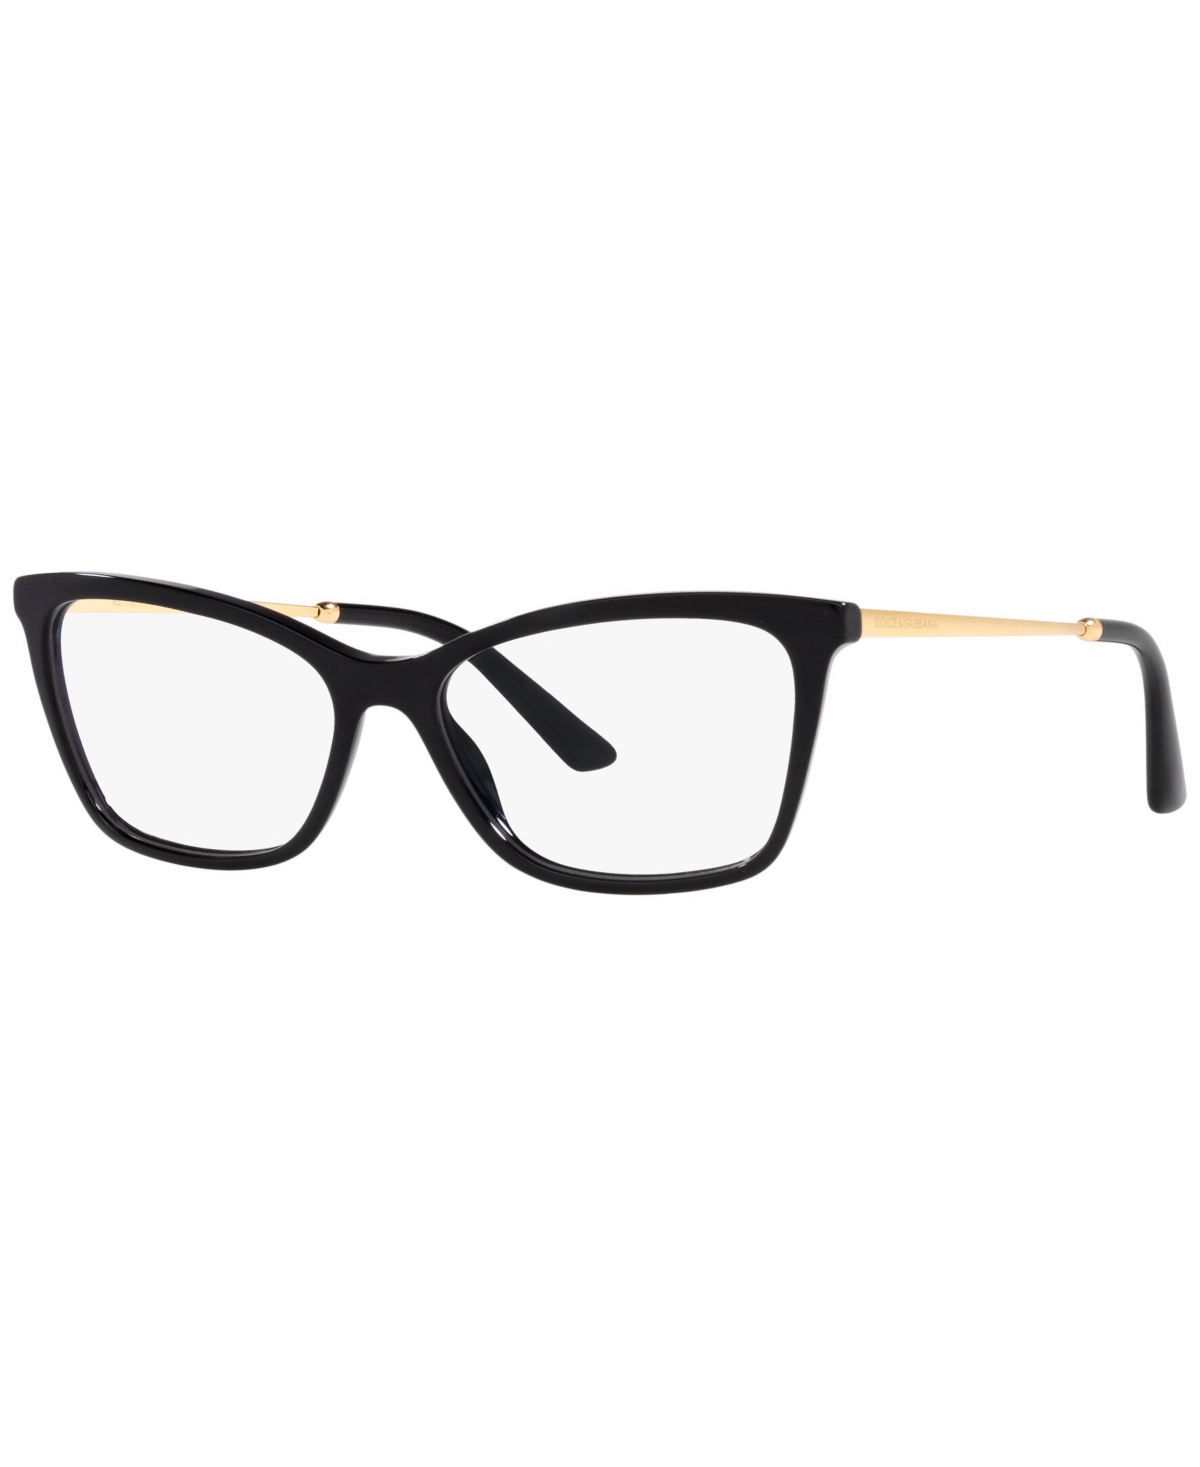 Dolce&Gabbana DG3347 Women's Rectangle Eyeglasses - Cube Black, Gold Tone